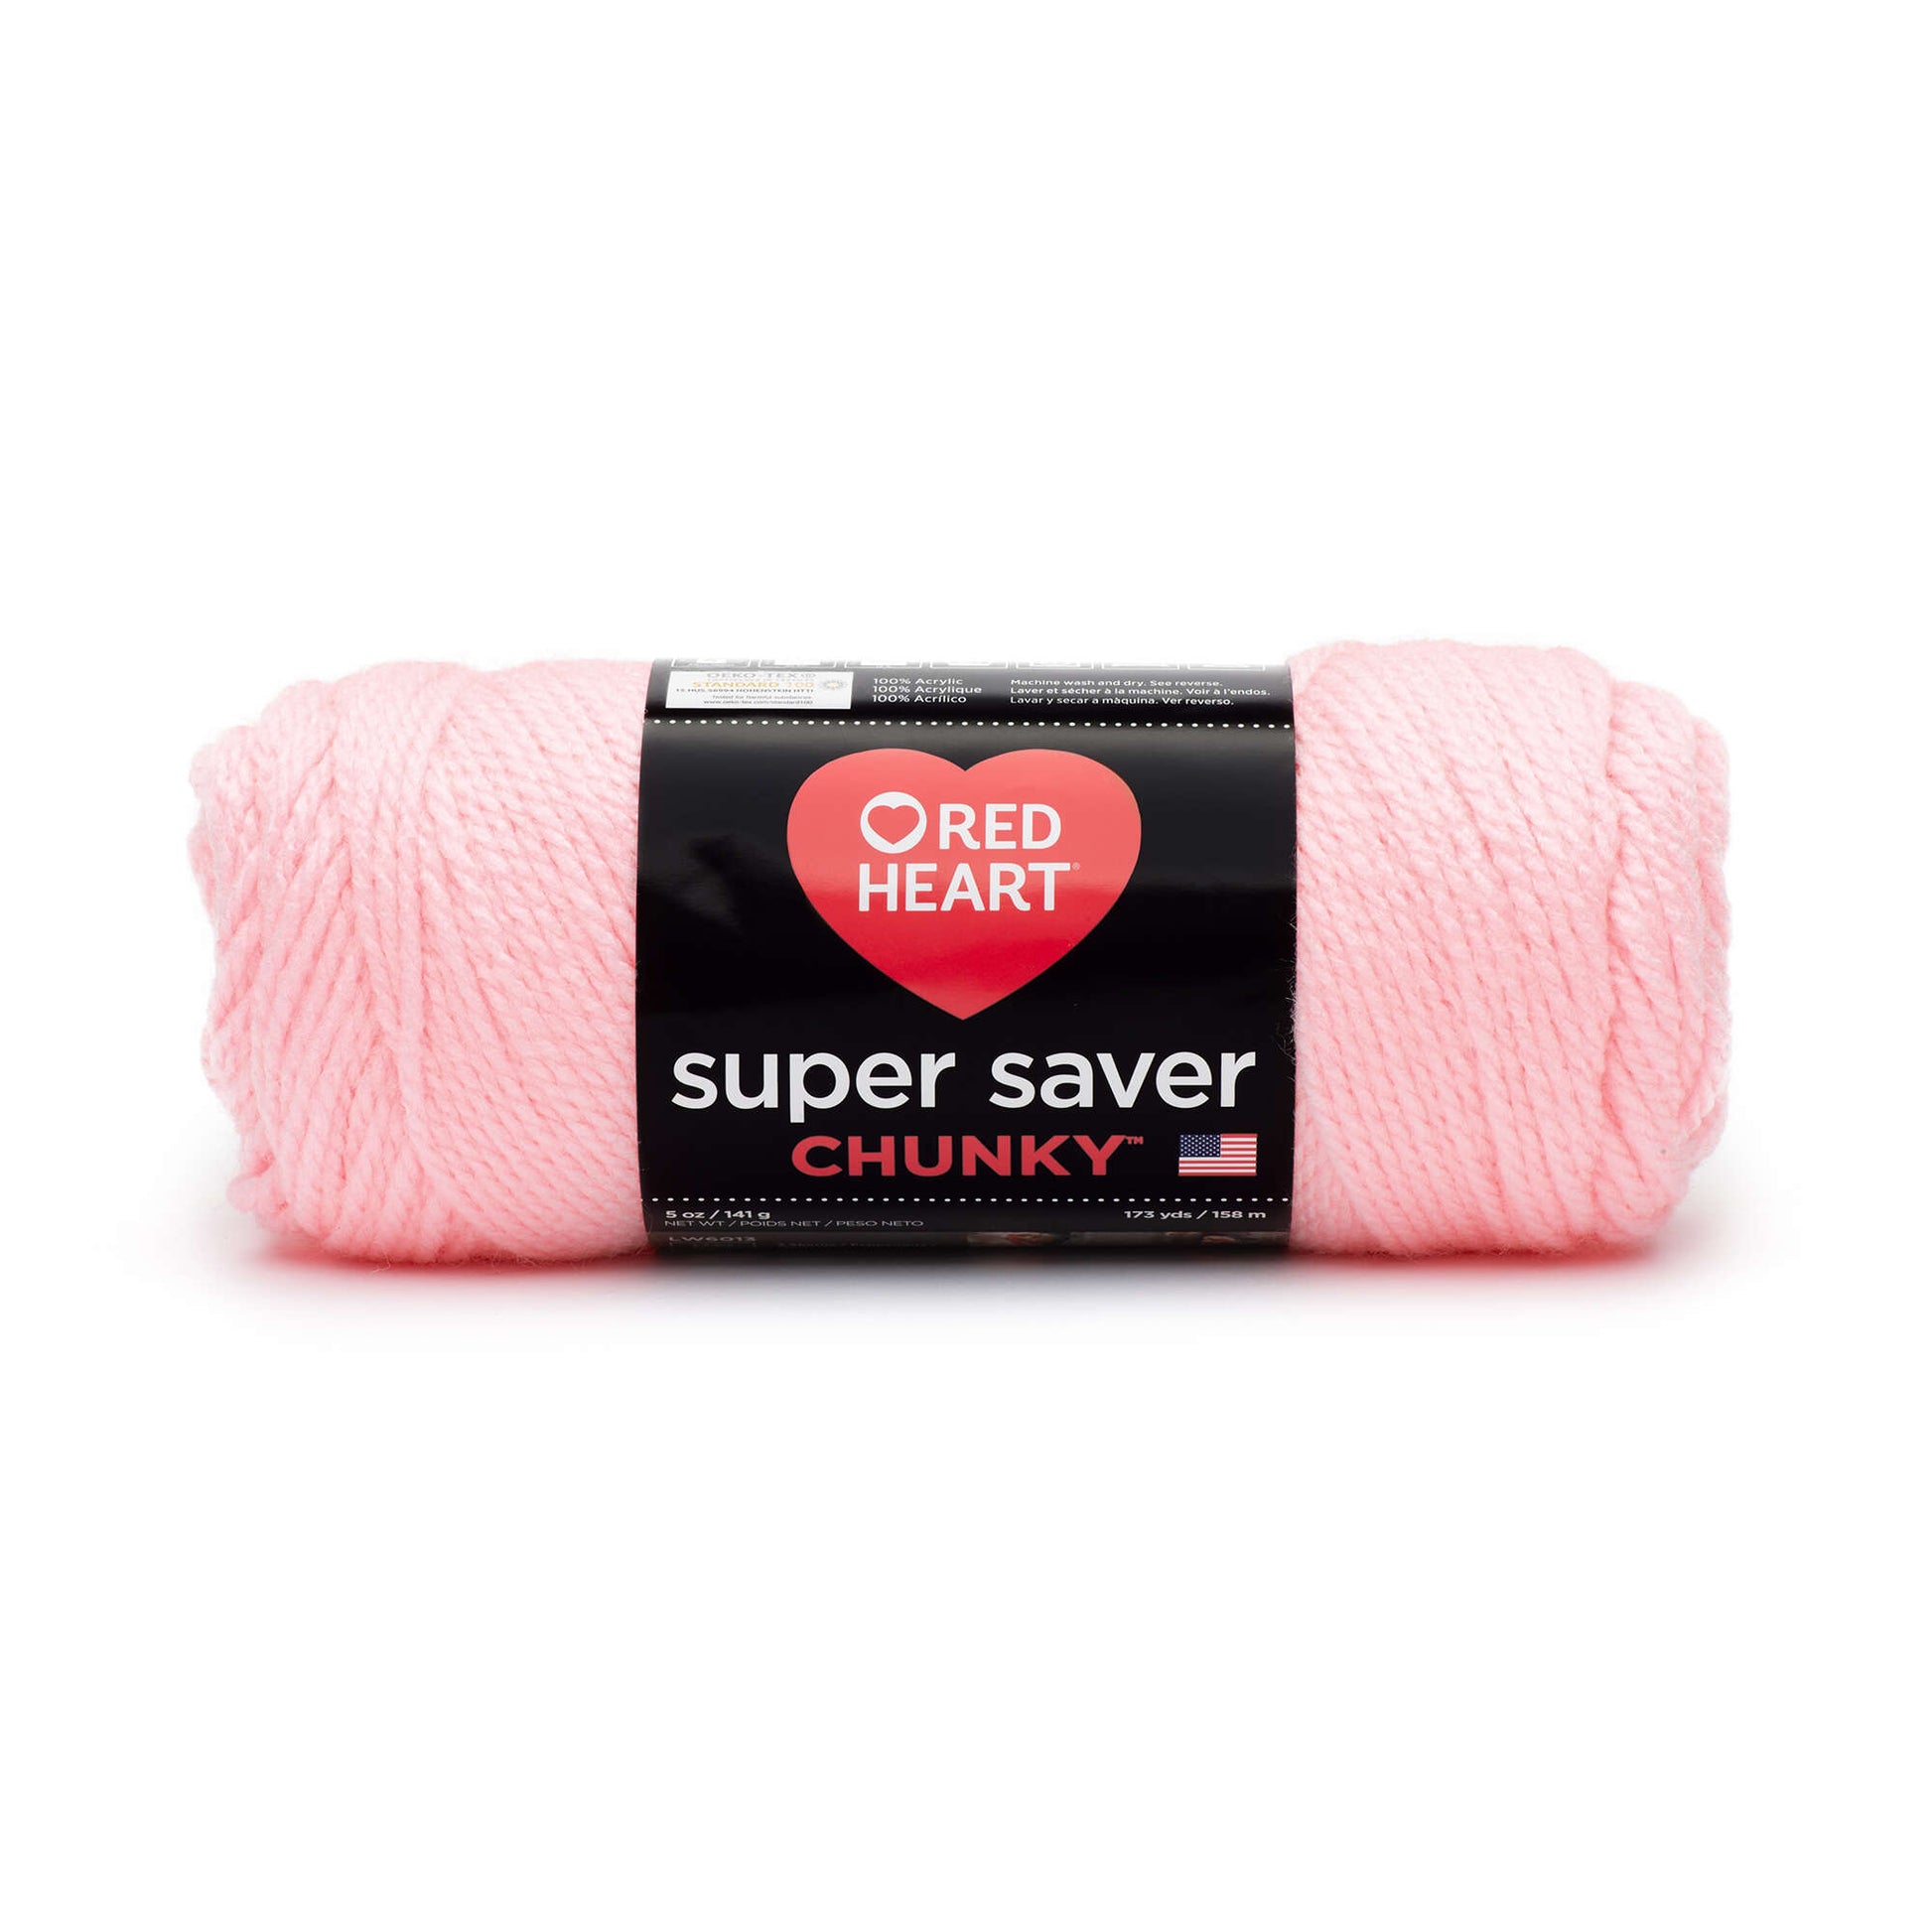 Red Heart Super Saver Yarn in Rosy | Pattern: Crochet | by Yarnspirations